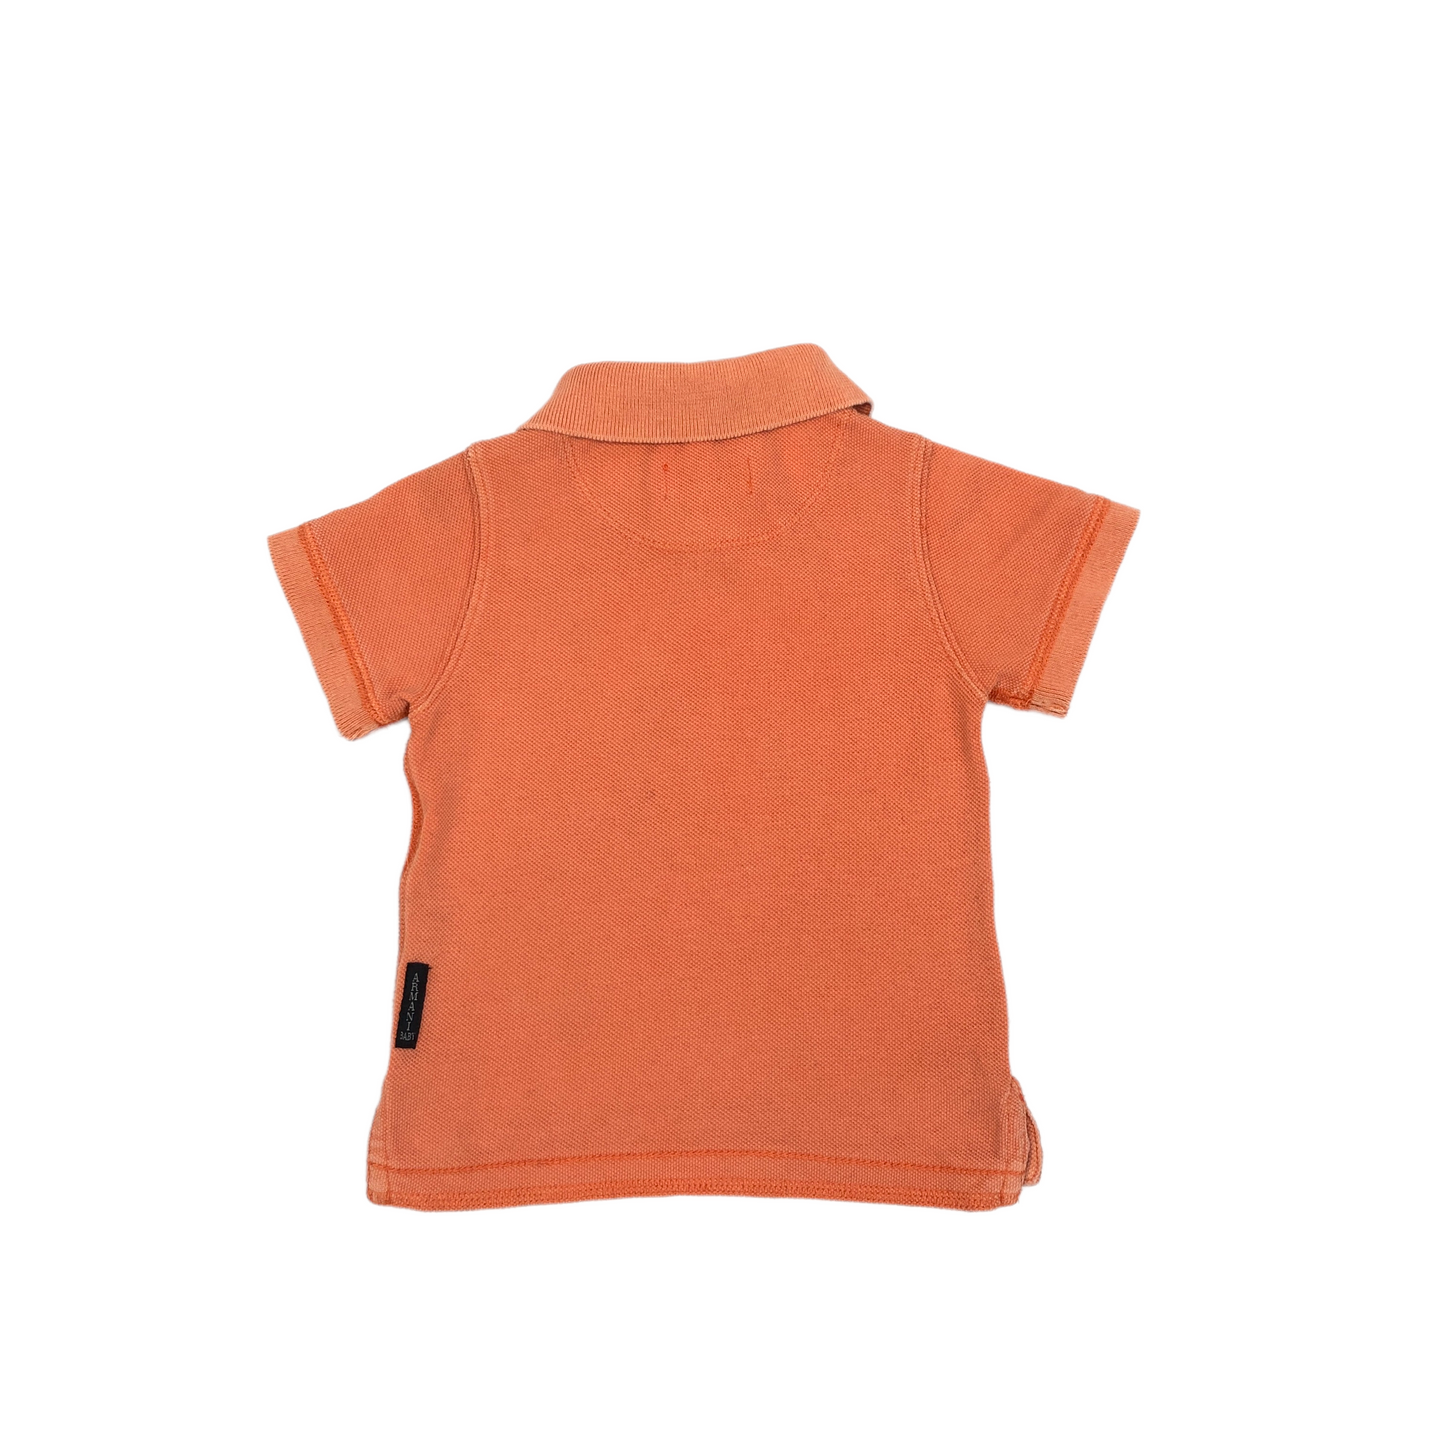 Vintage Armani Baby Polo T-Shirt (6mths)